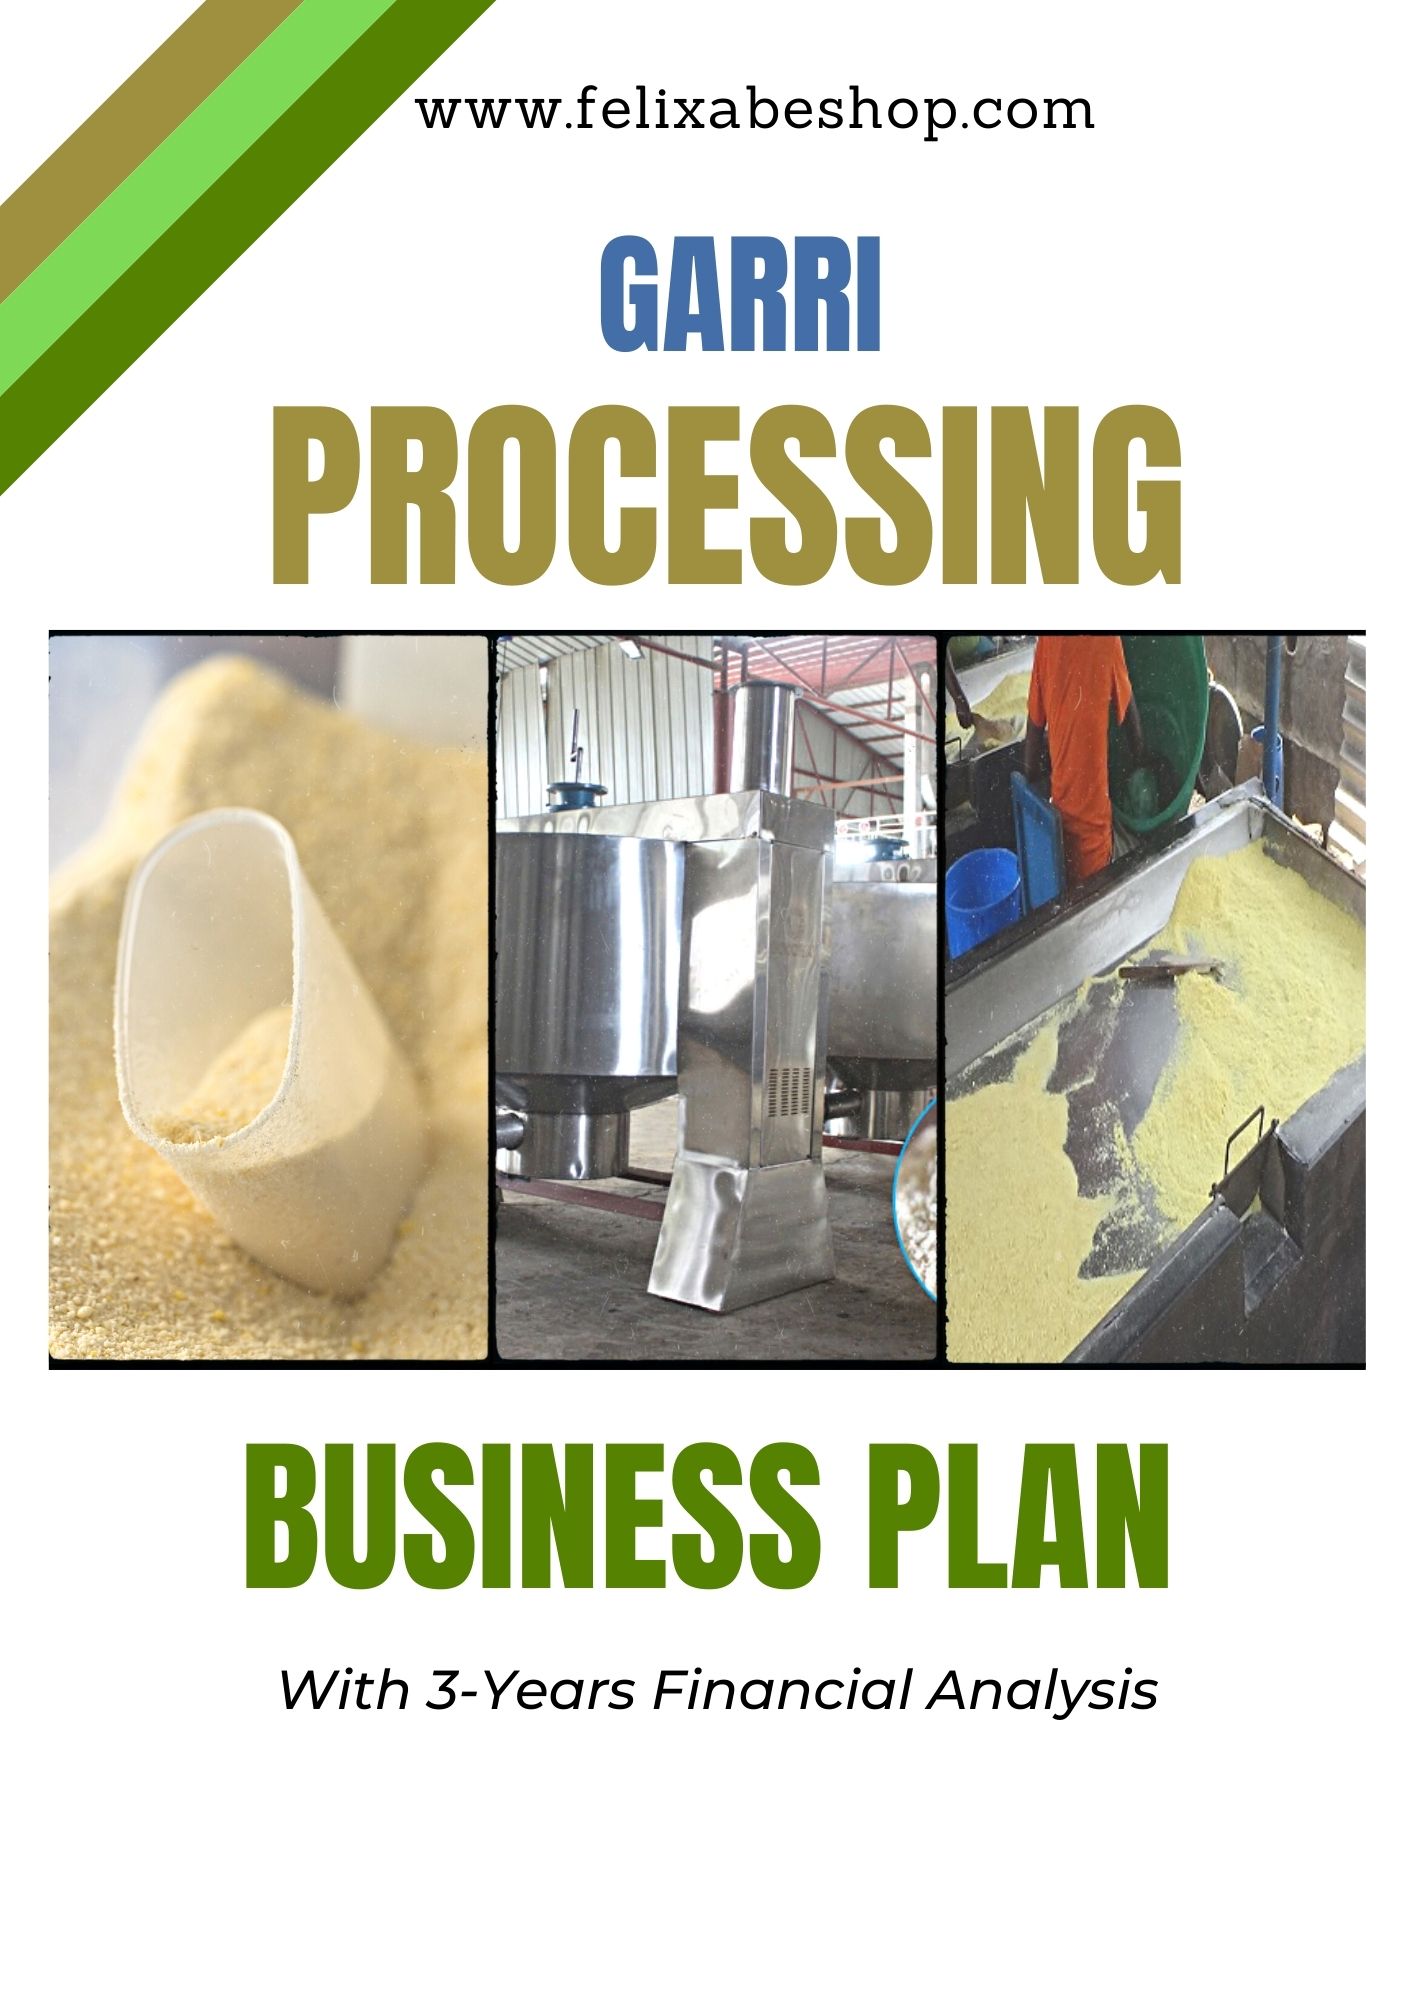 free business plan for garri processing